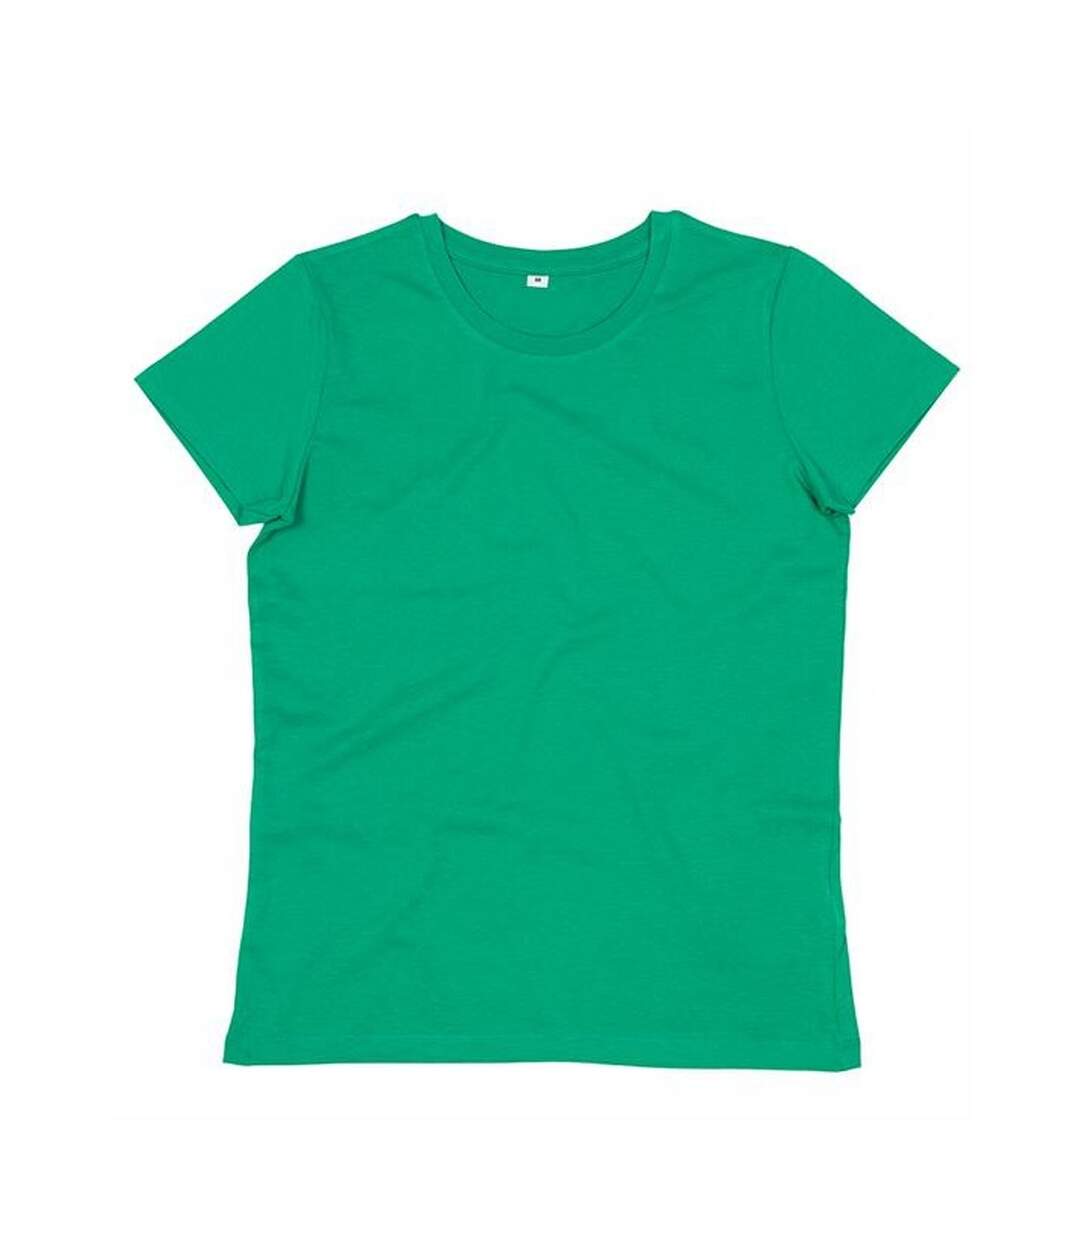 Mantis Womens/Ladies Essential T-Shirt (Charcoal Grey Melange)